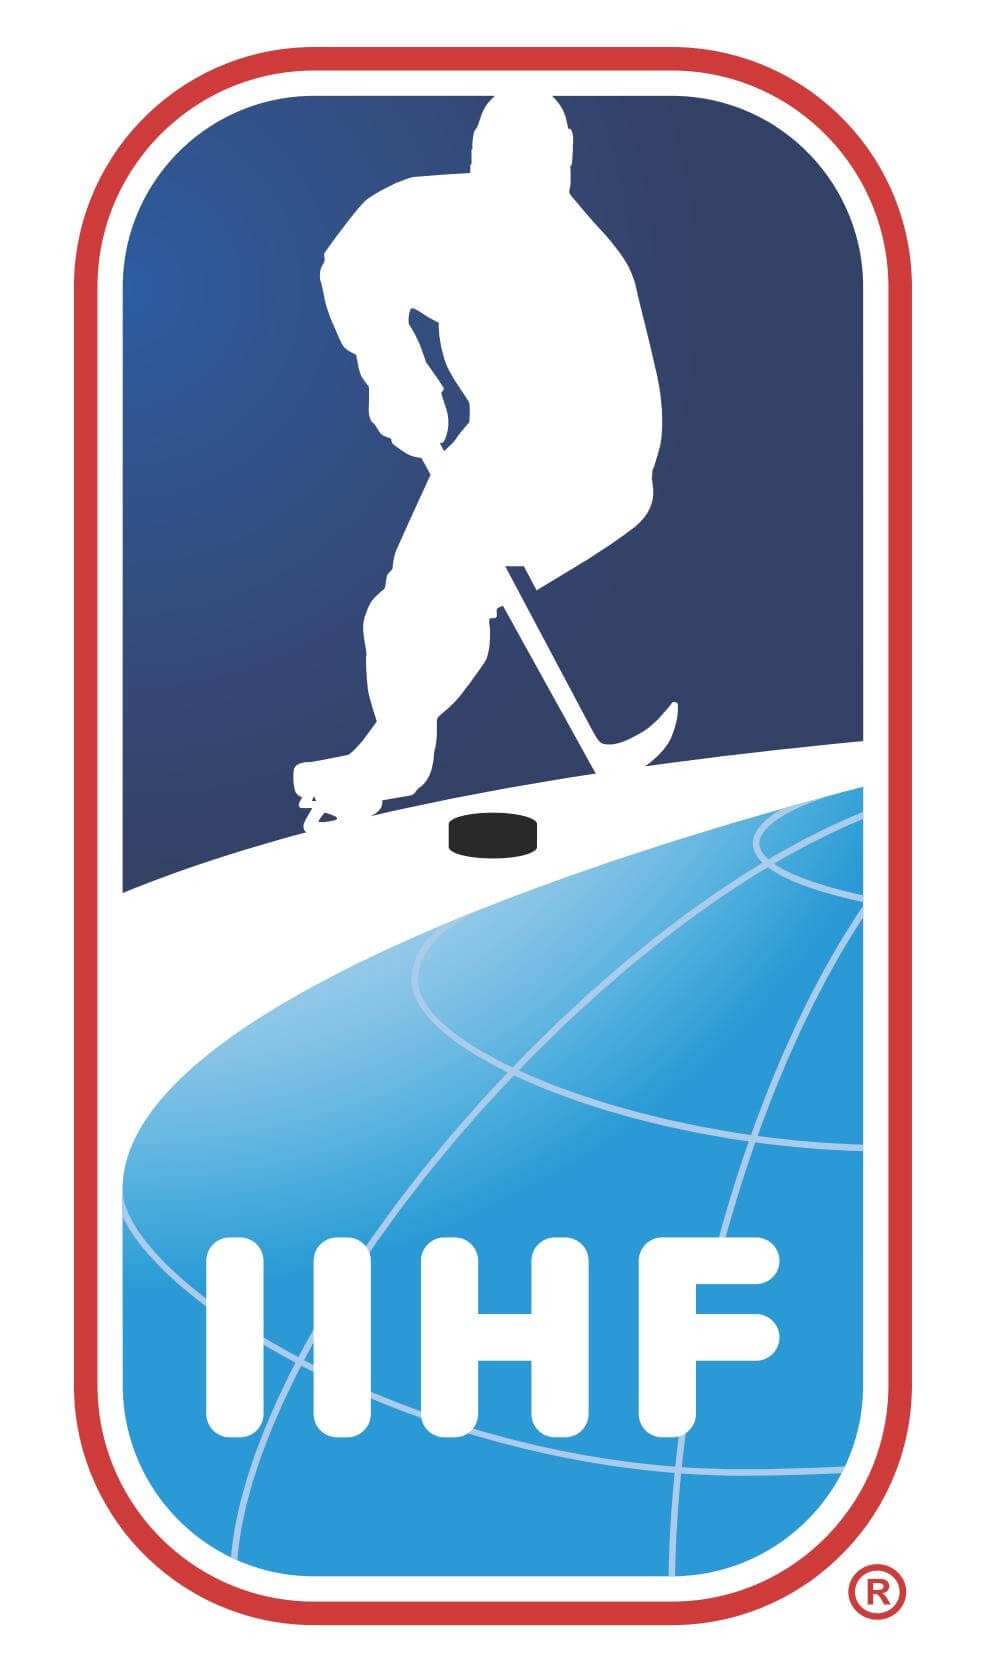 IIHF International Ice Hockey Federation logo